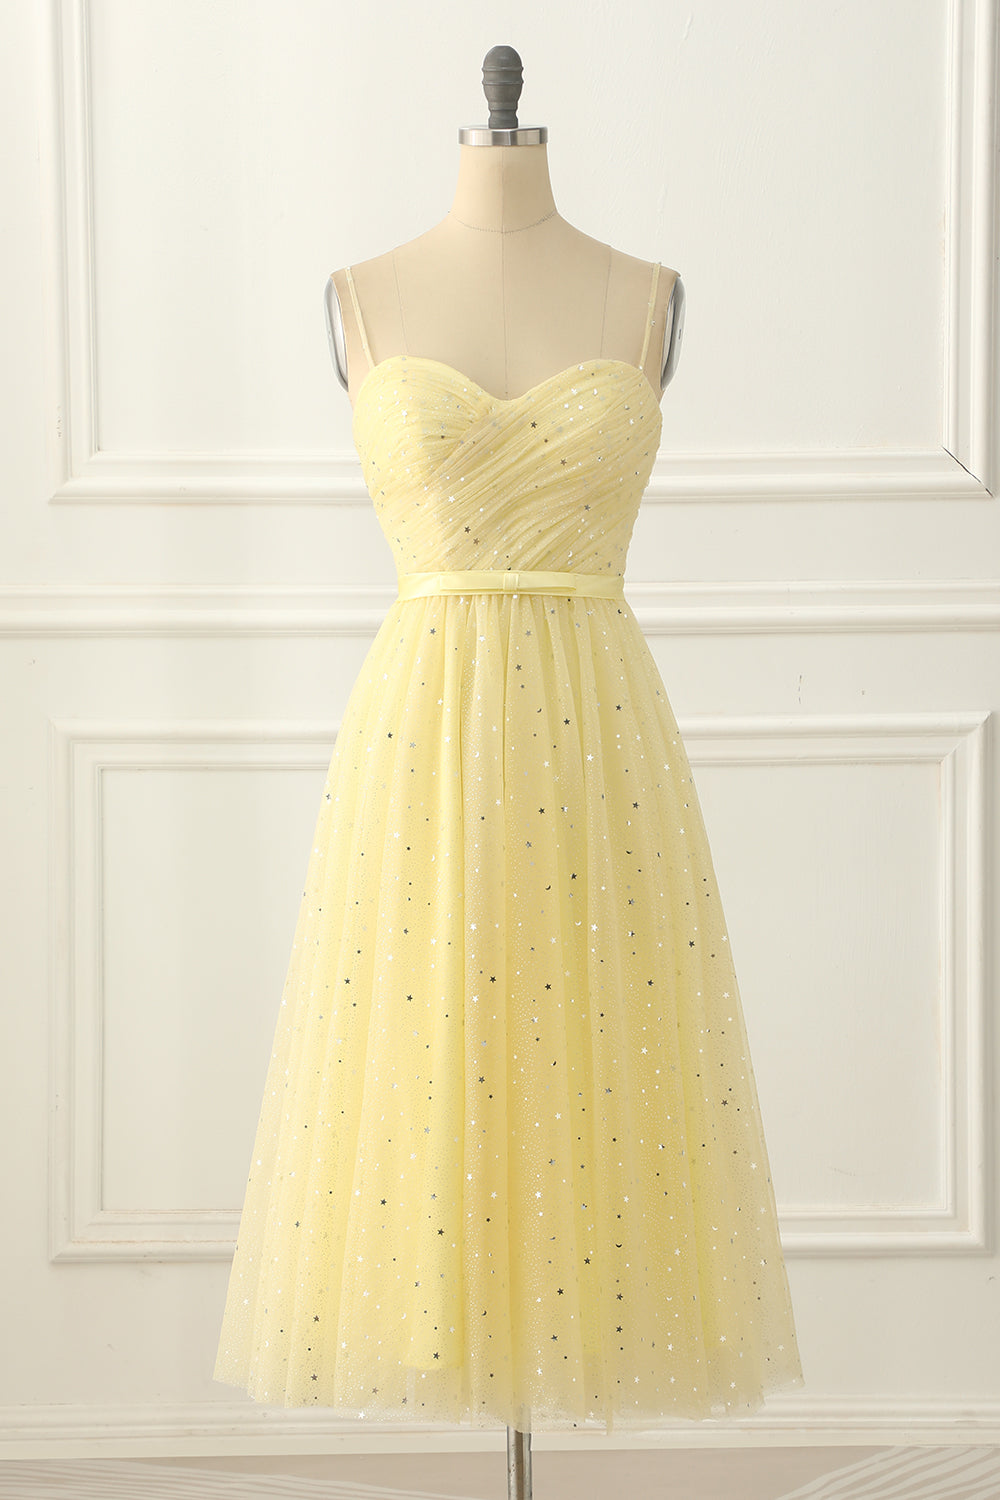 Party Dress 2029, Yellow Tulle Spaghetti Straps Midi Sparkly Prom Dress